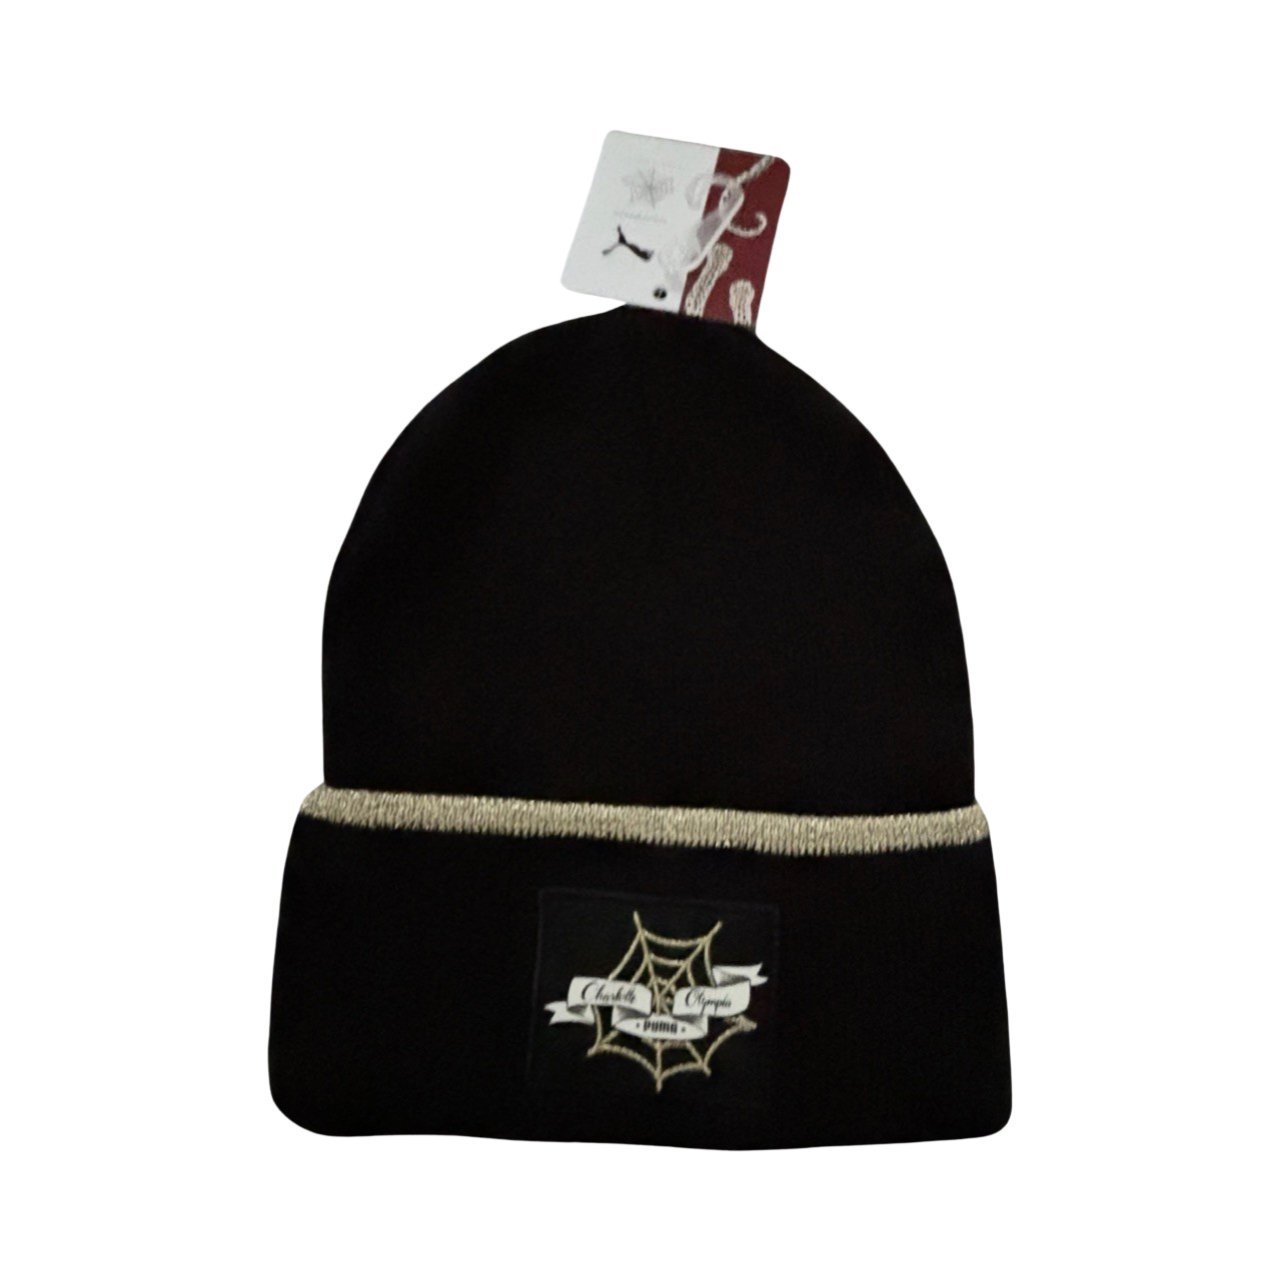 Puma x Charlotte Olympia Black & Gold Beanie Hat - One size - Soul and Sense Streetwear